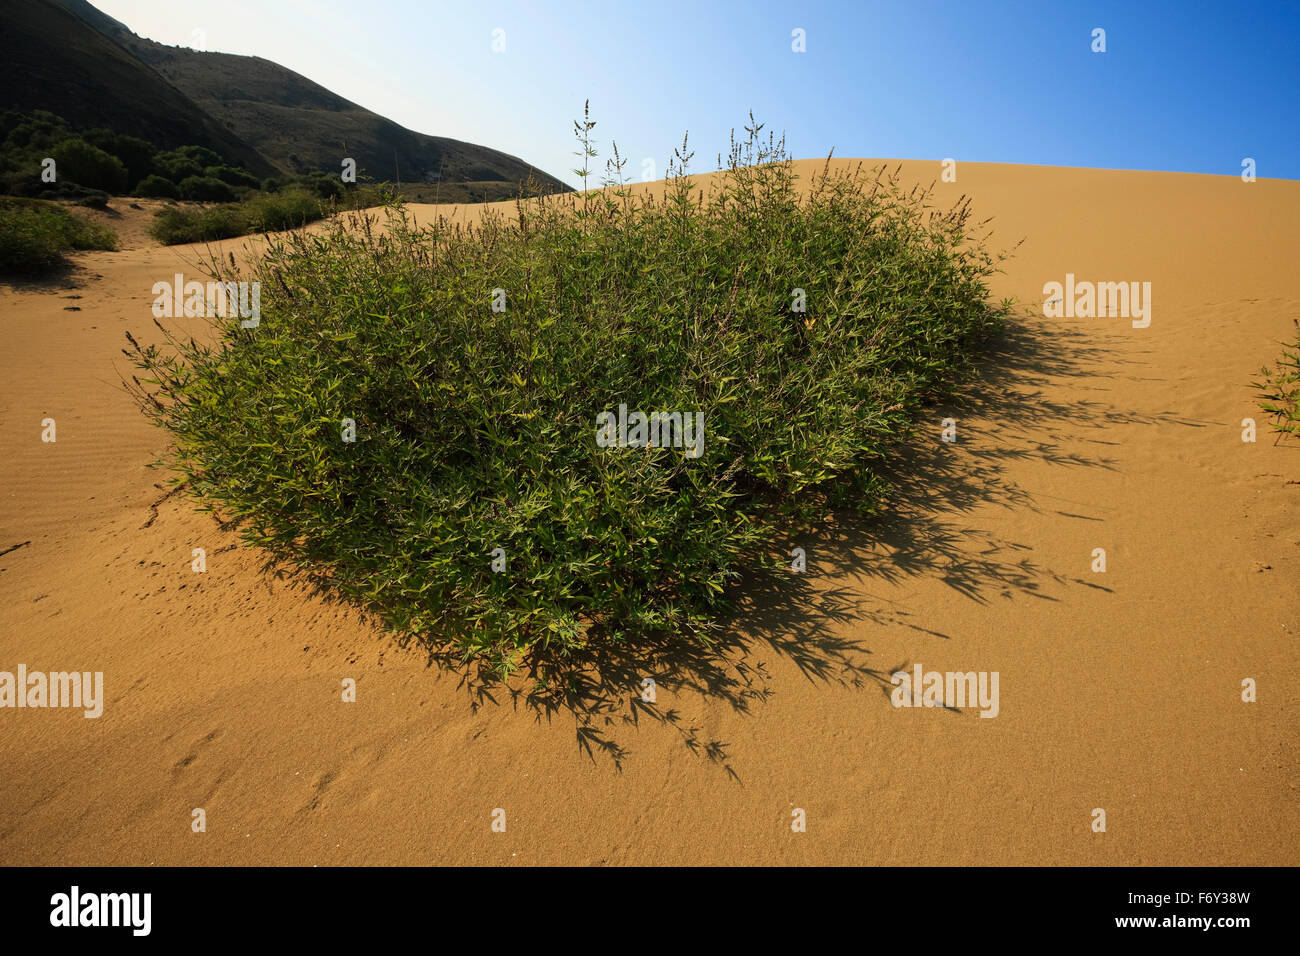 Vegetation sp. vitex agnus-castus or chaste tree in the sand dunes of Gomati. Katalako village, Lemnos or Limnos island, Greece Stock Photo